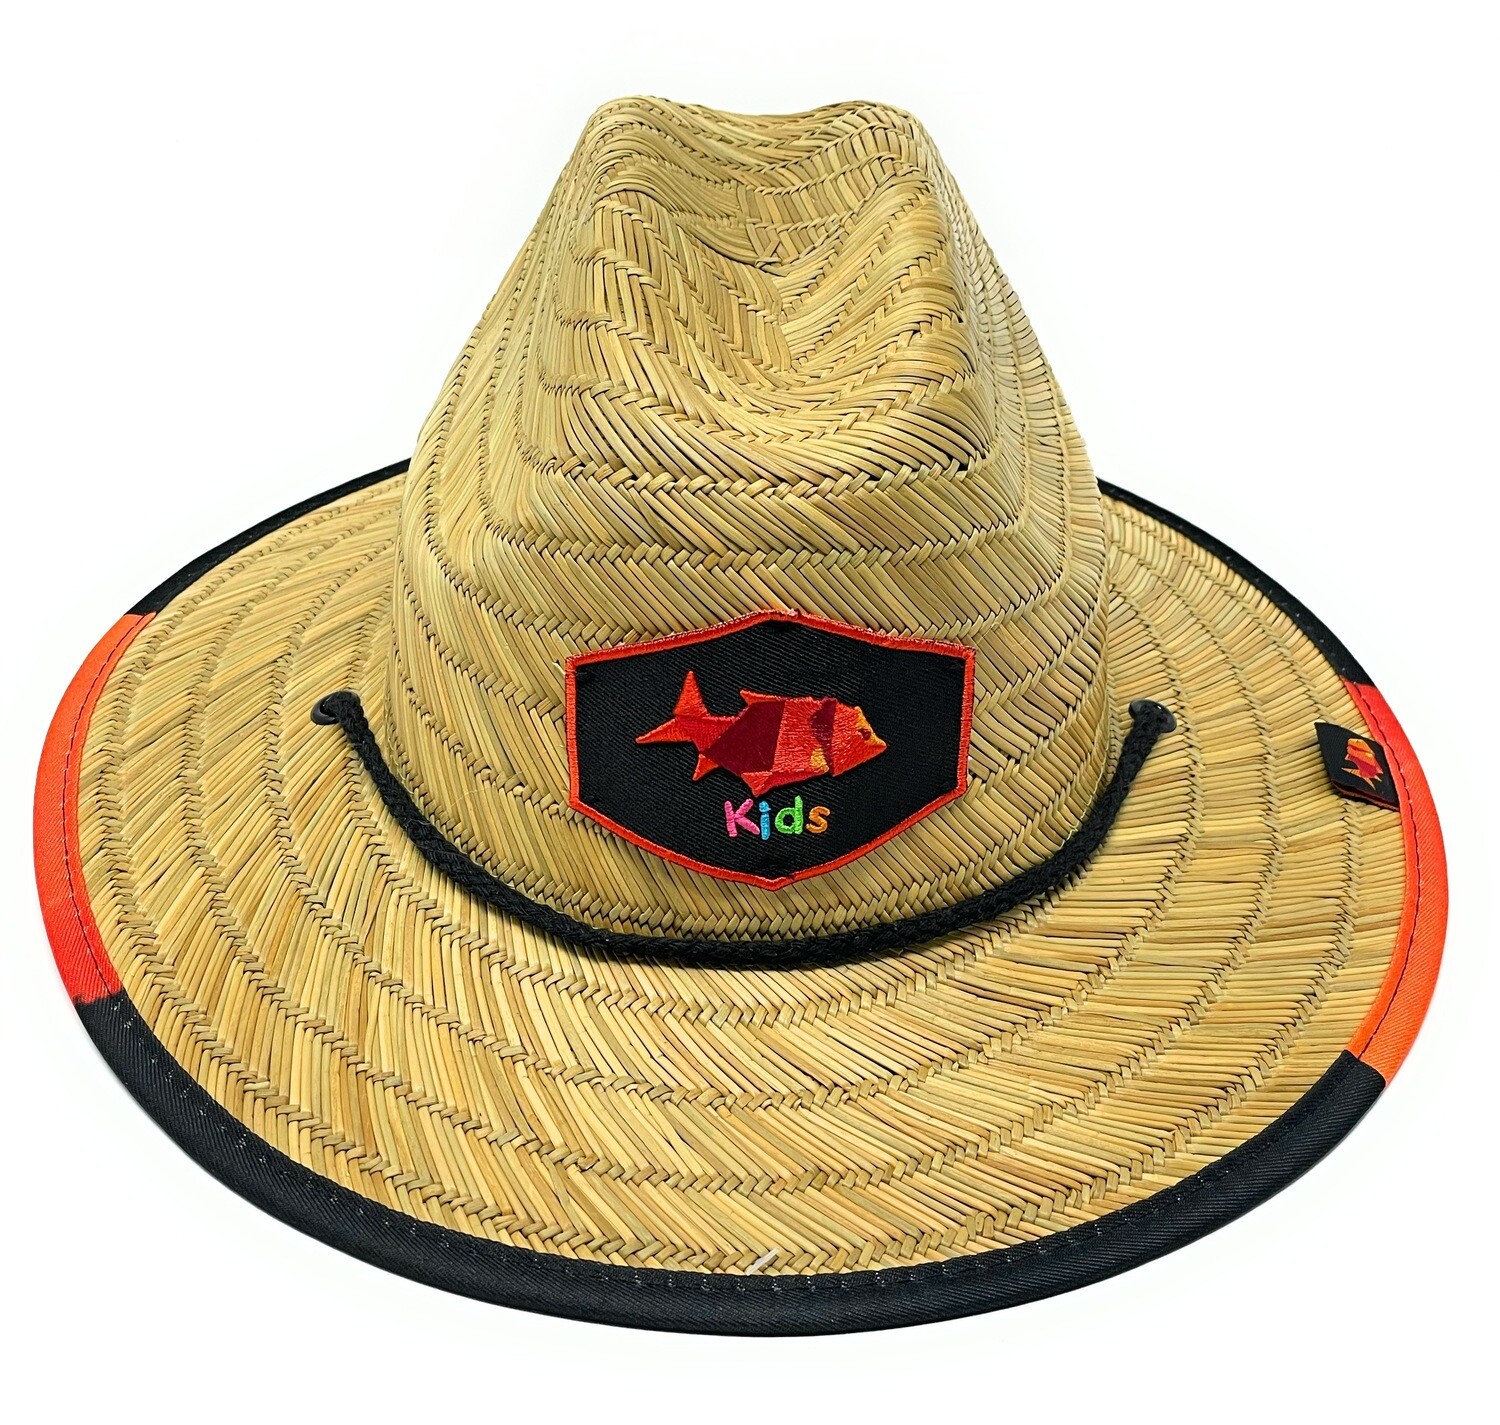 Sunrise Lifeguard for Kids Straw Hat. Kids beach Sun hat.